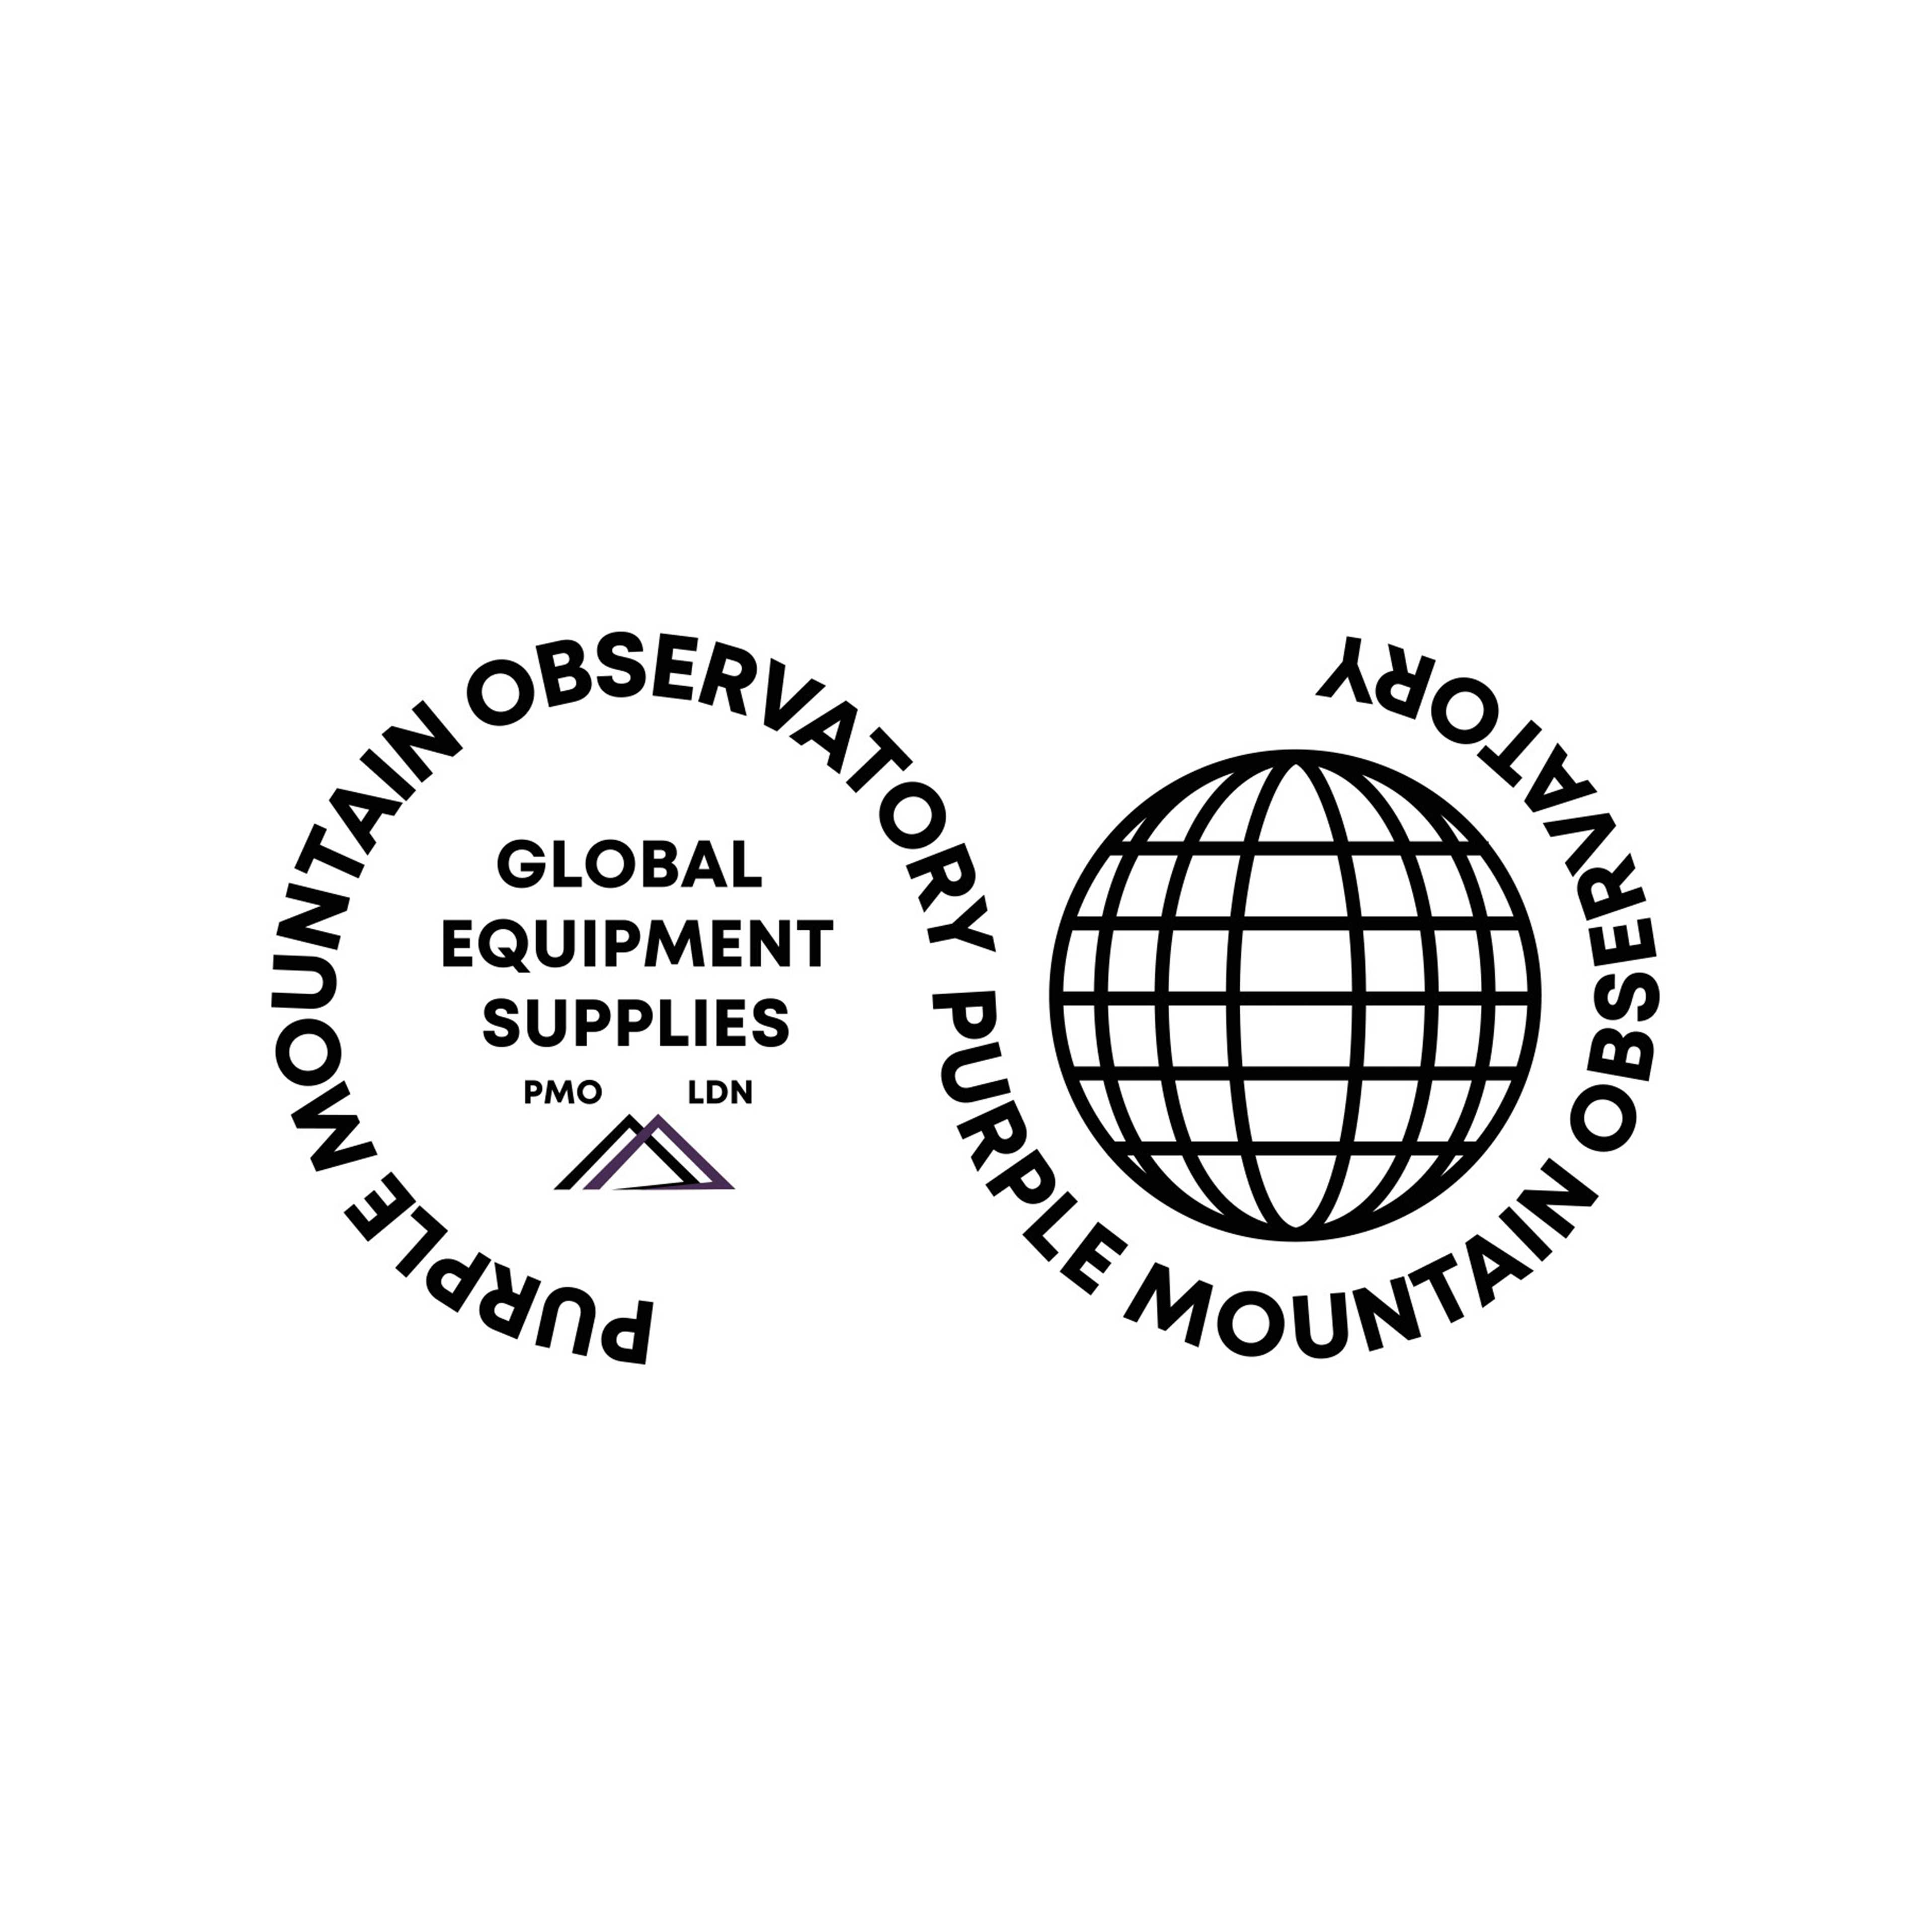 Purple Mountain Observatory